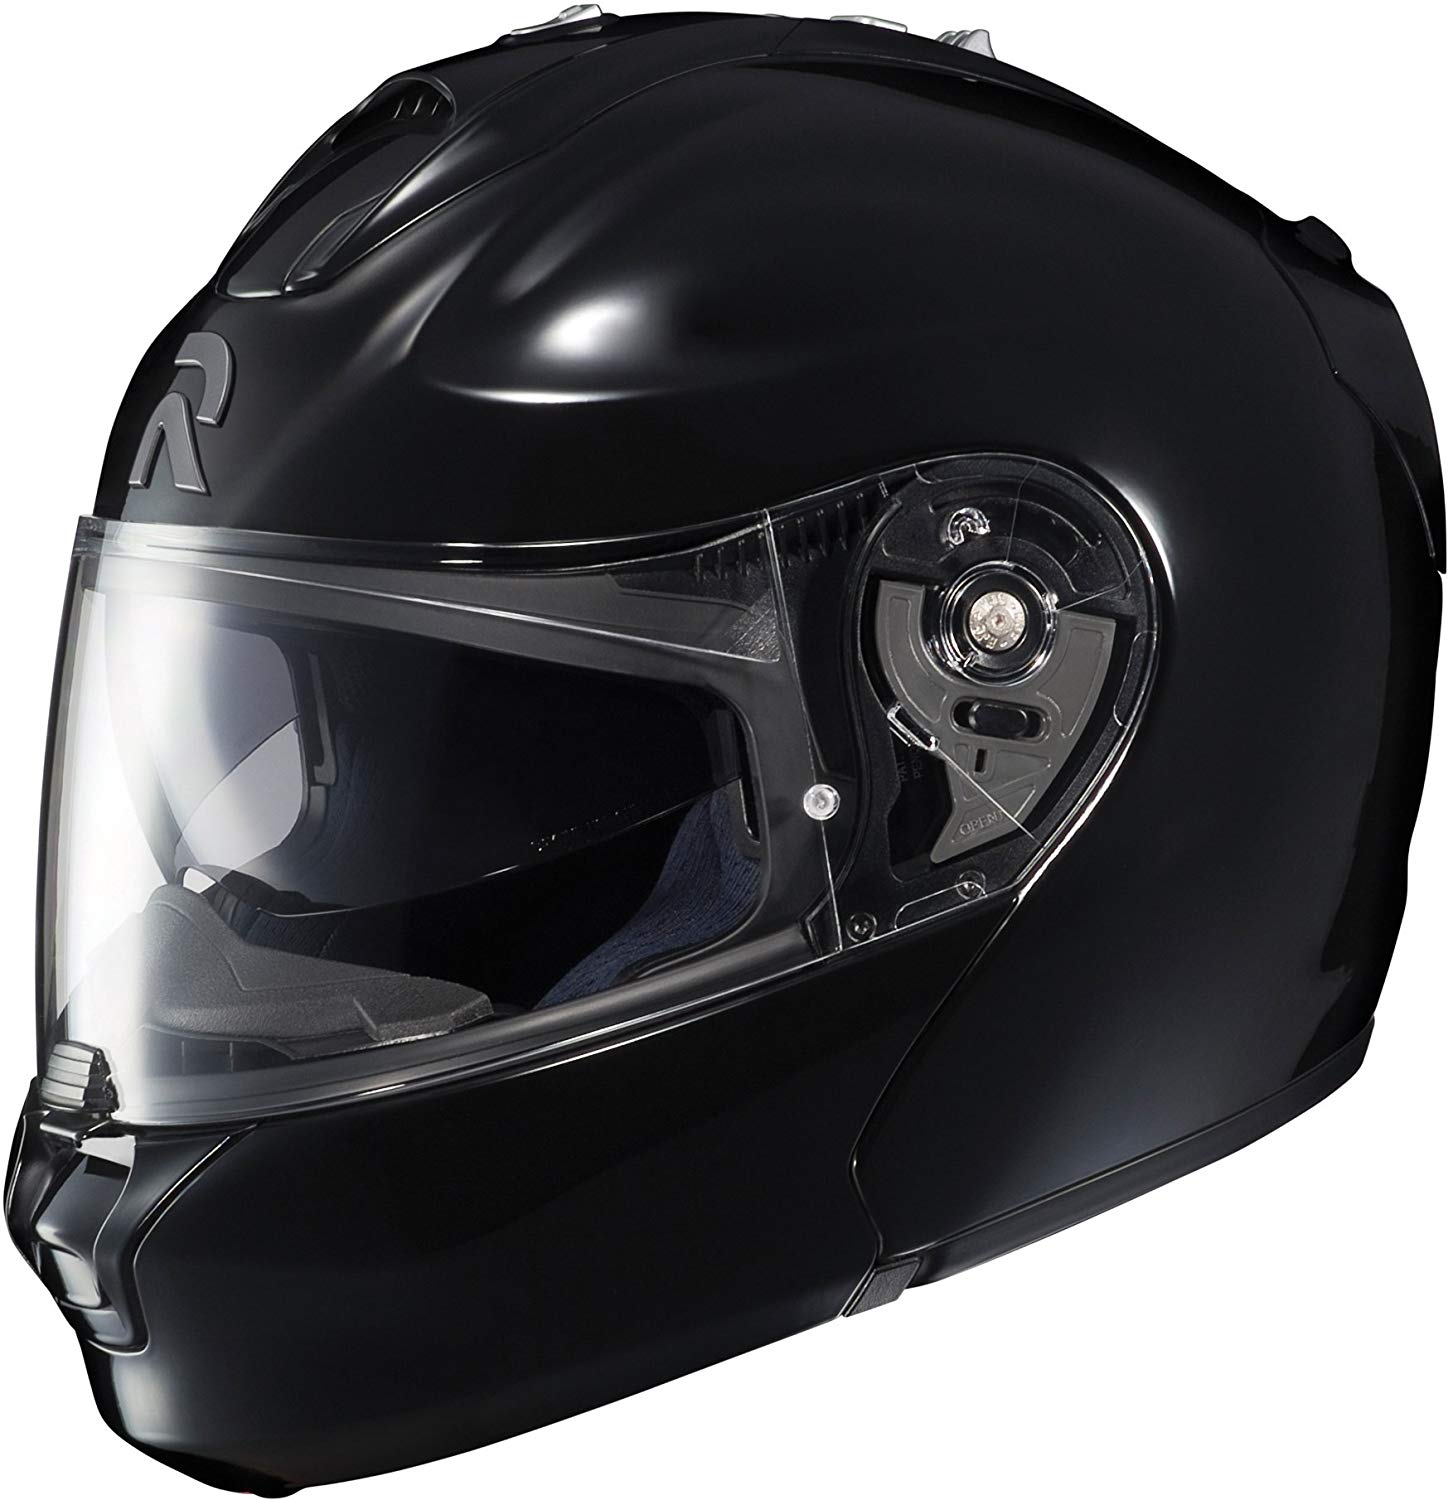 Stunning Gallery Of motorcycle helmet side view Pics